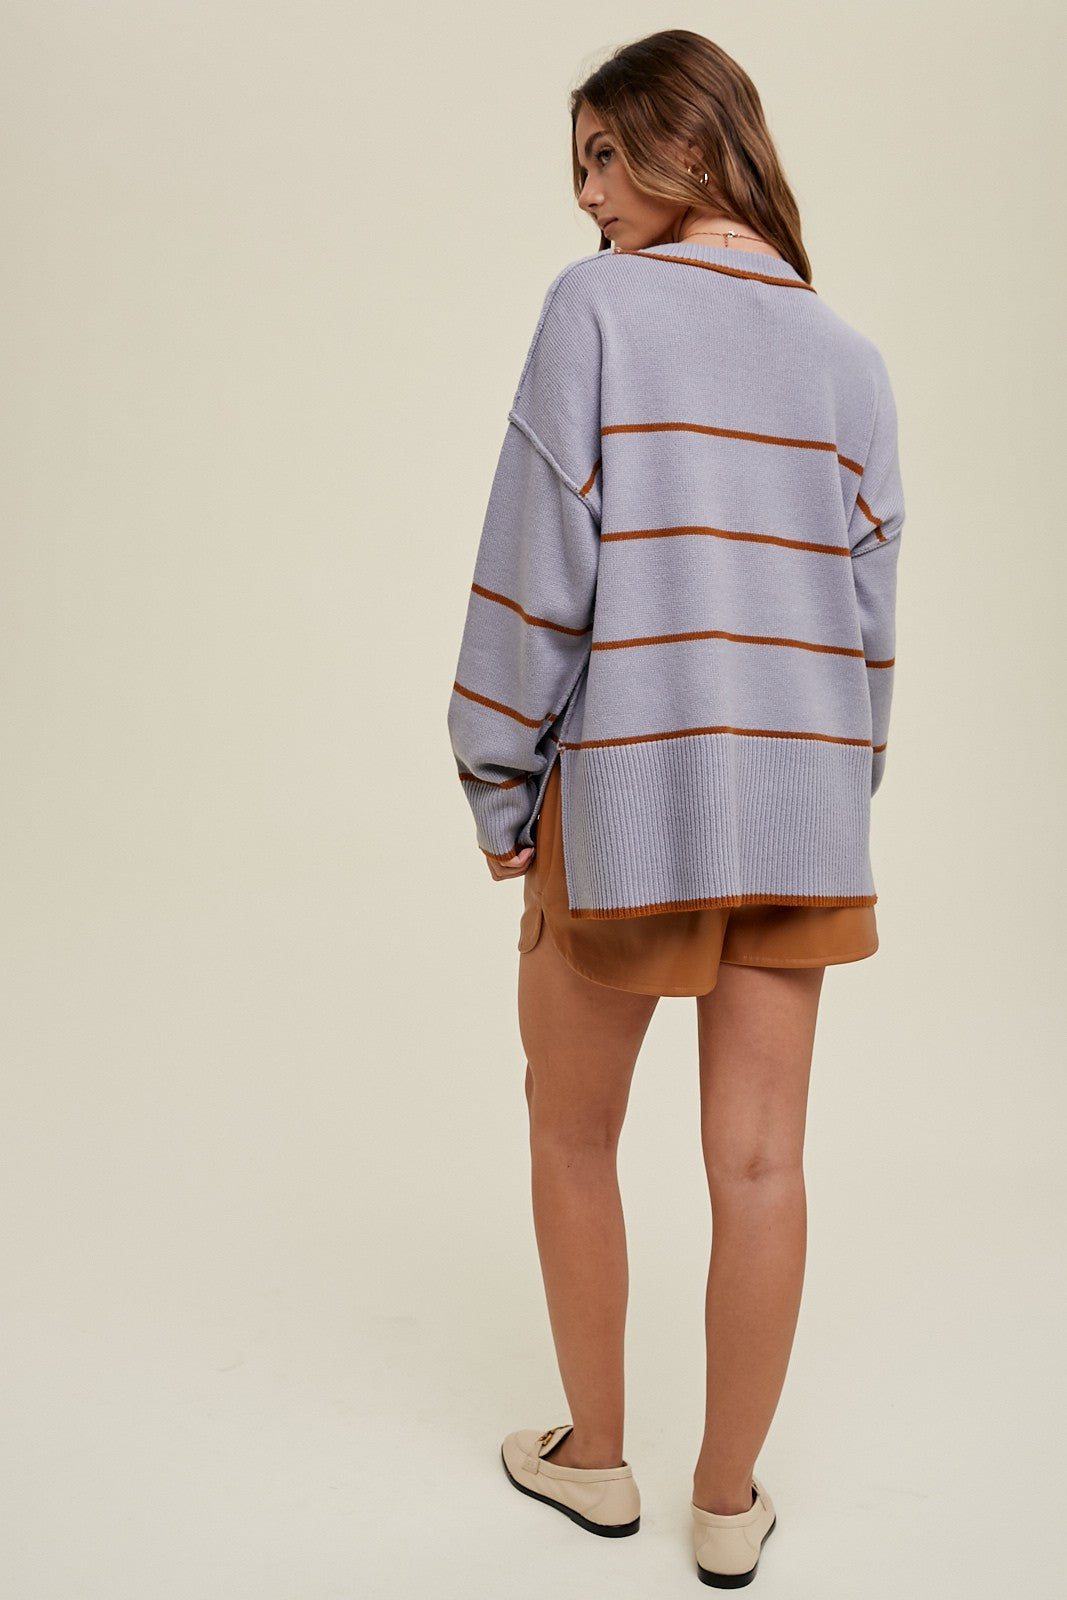 Ava Striped Sweater